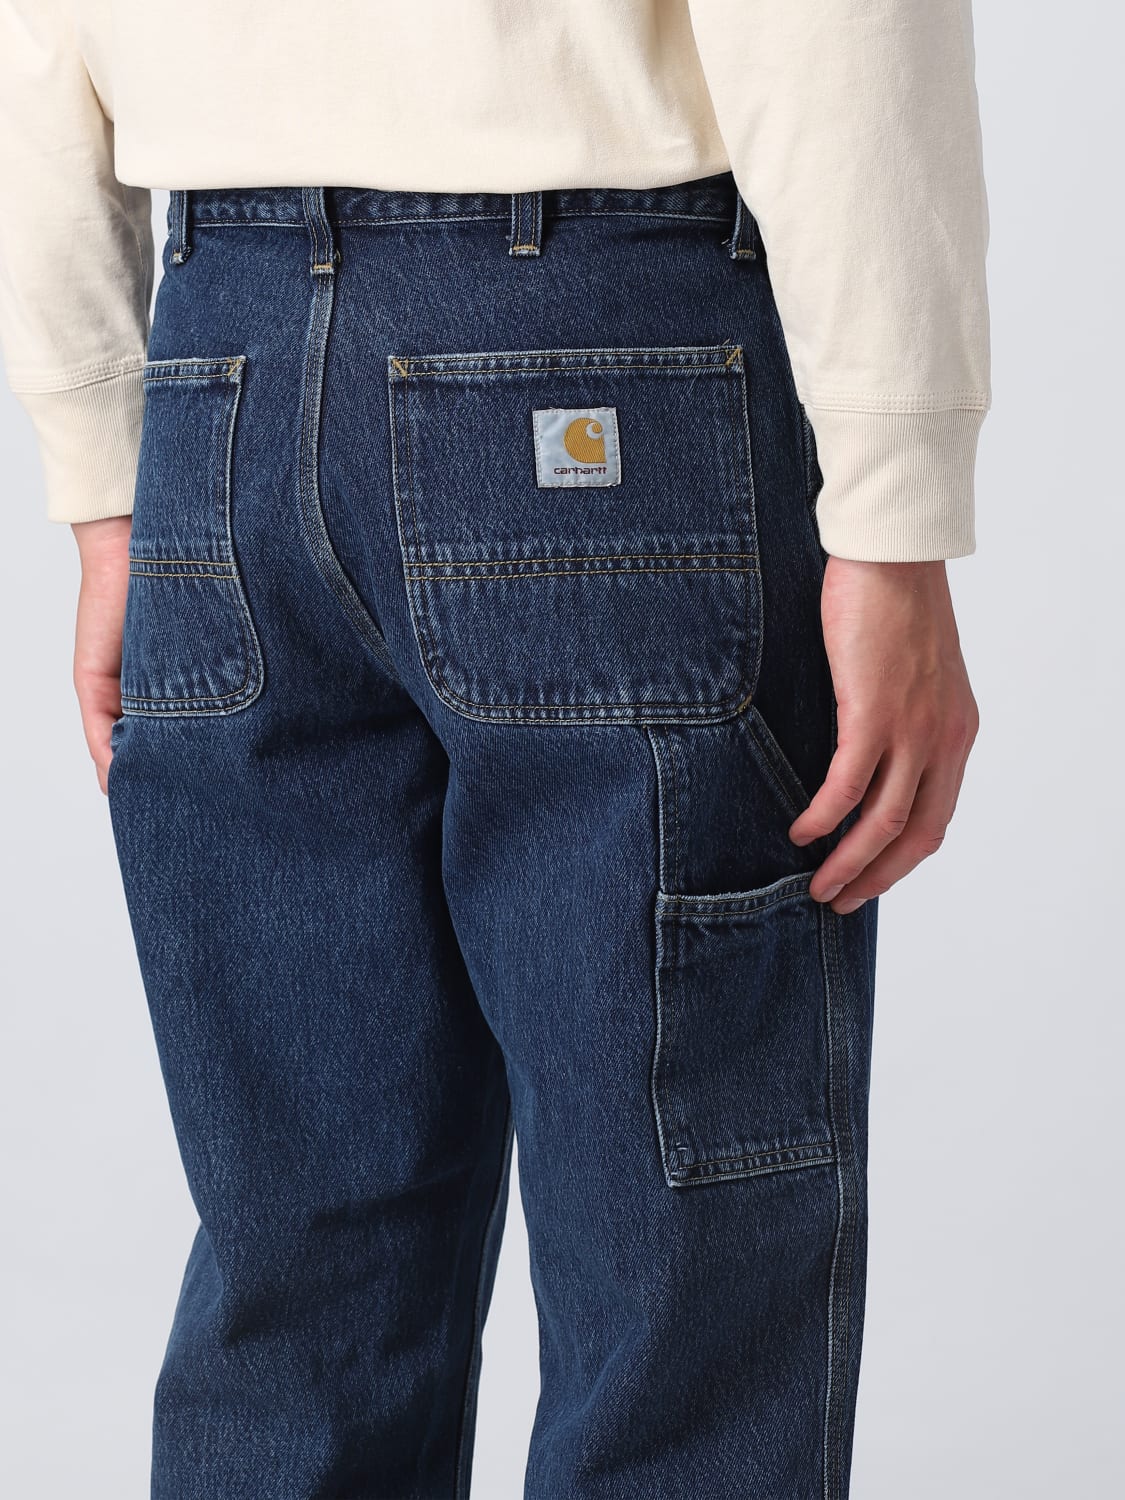 CARHARTT WIP: jeans for man - Denim | Carhartt Wip jeans I032024 online ...